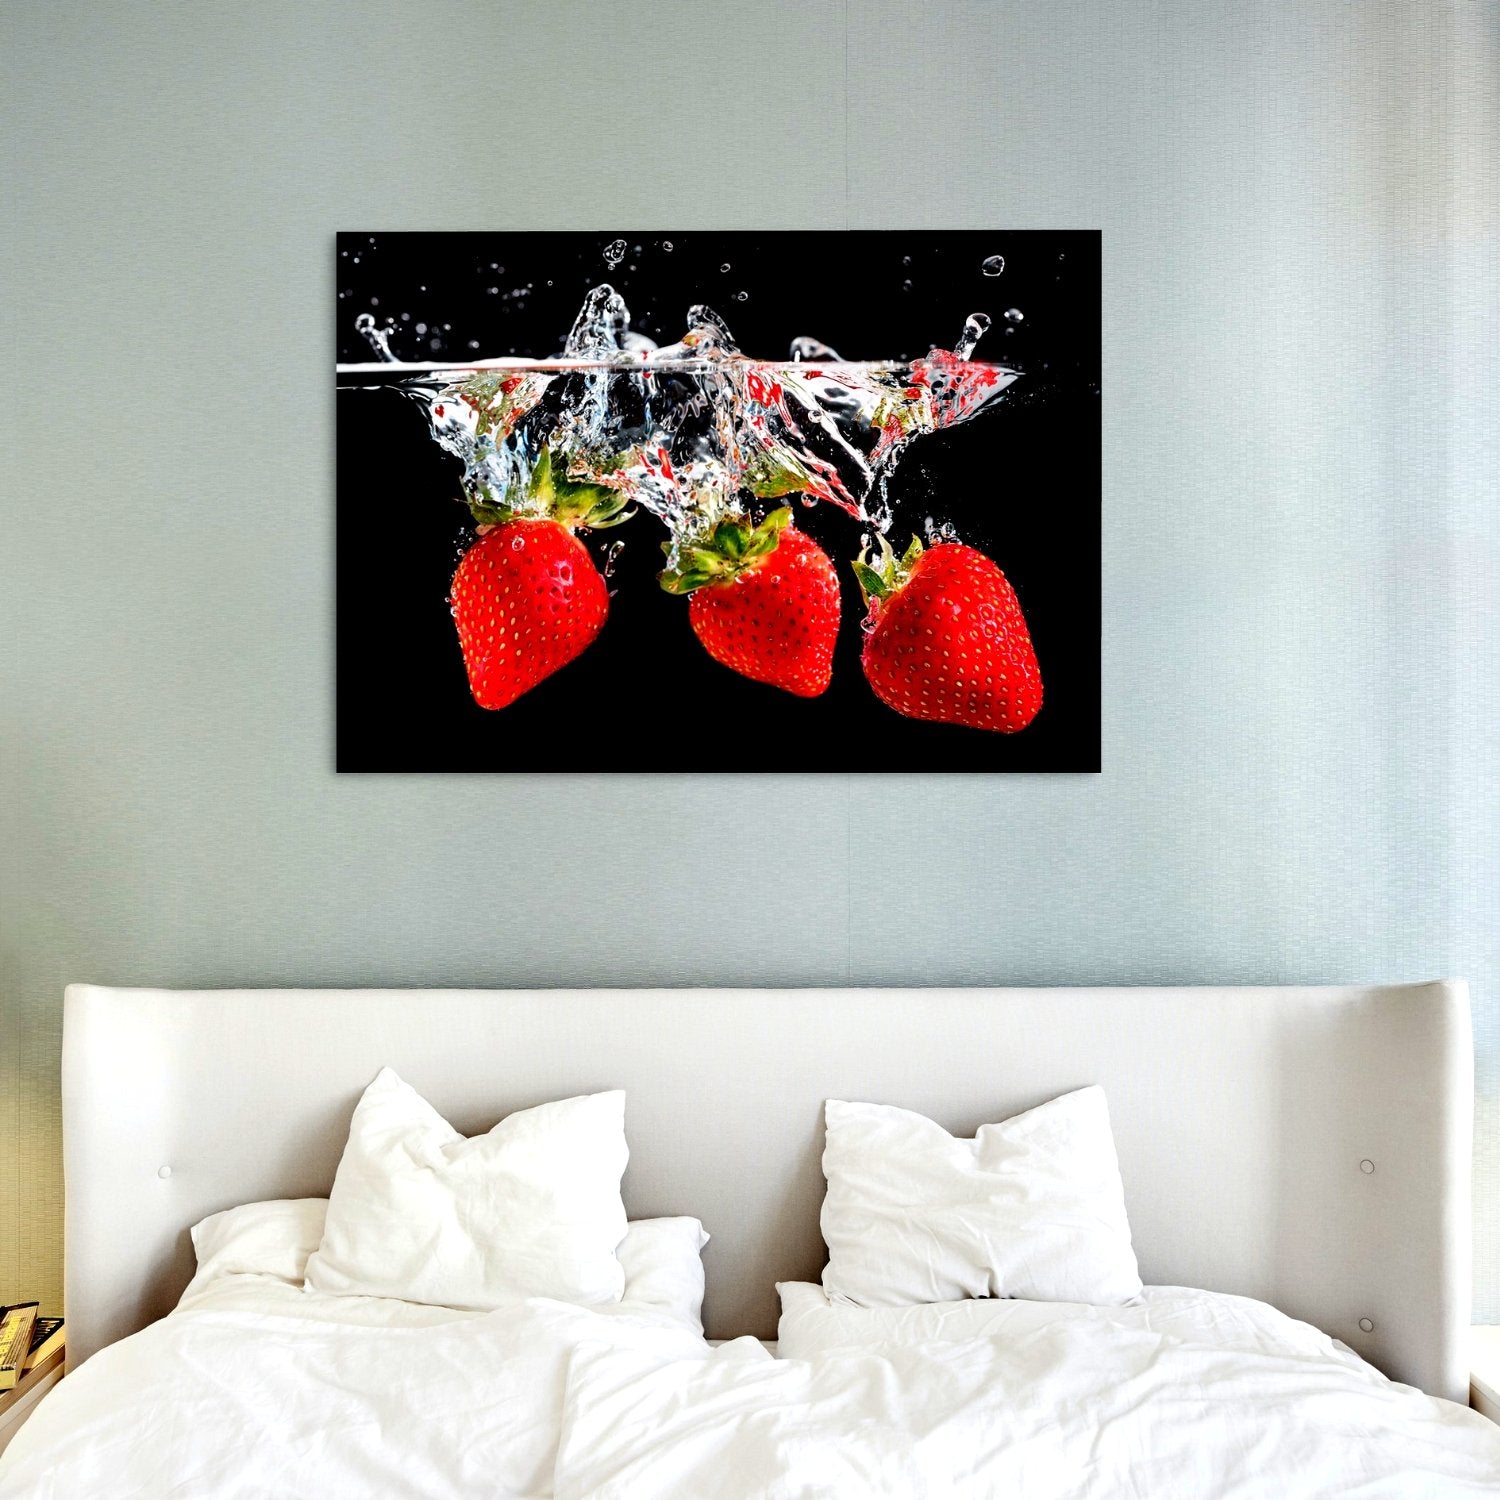 Decorațiune perete canvas "Fruits" - Cadouri Personalizate